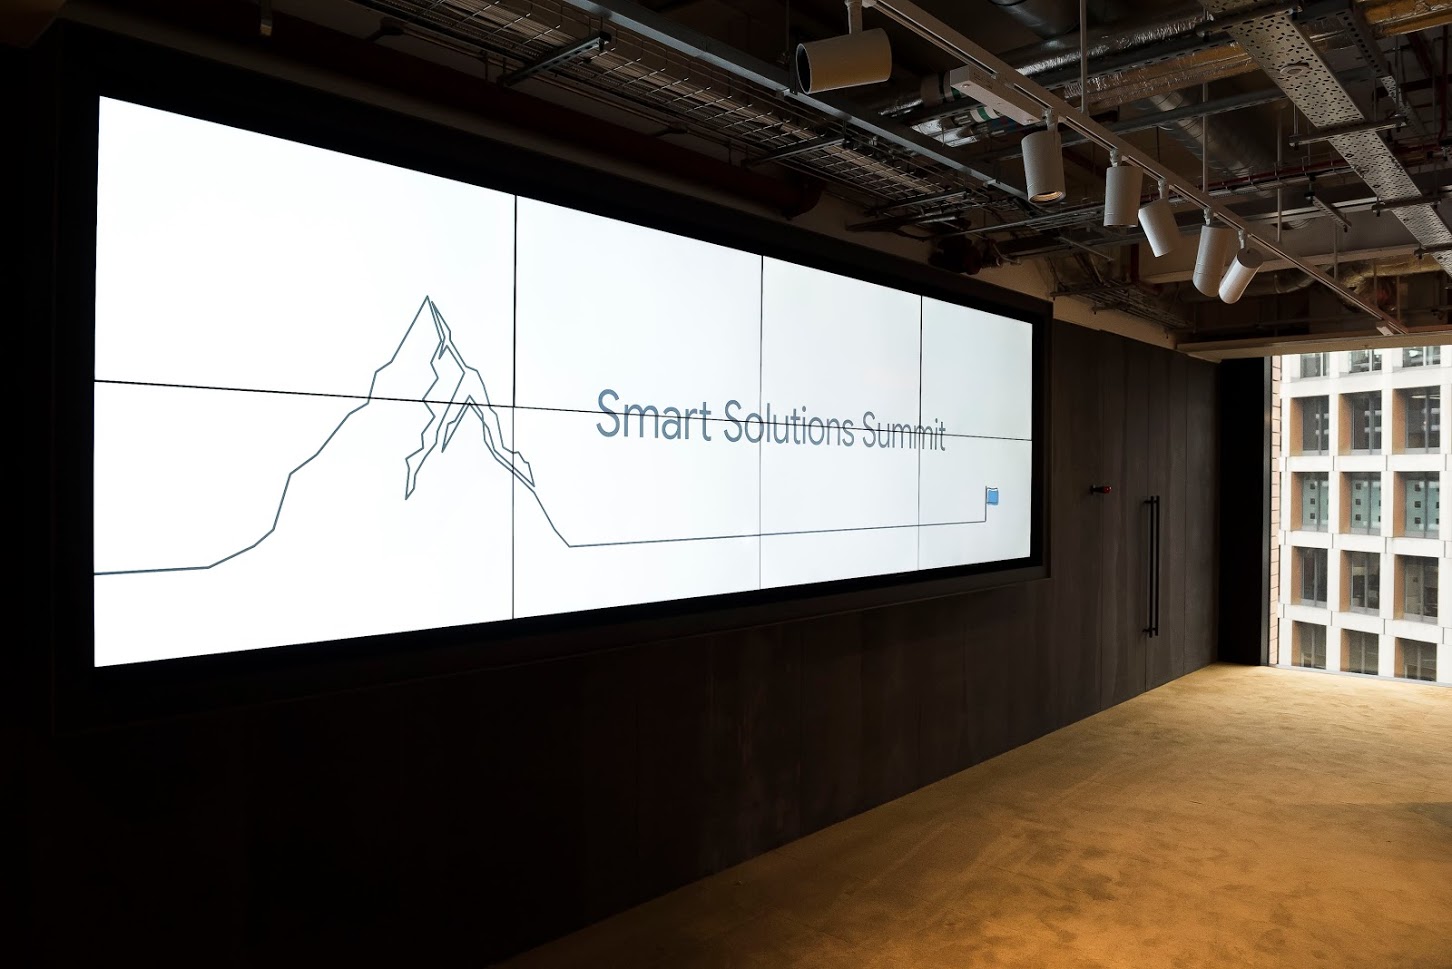 Key Takeaways from Google’s Smart Solutions Summit 2019